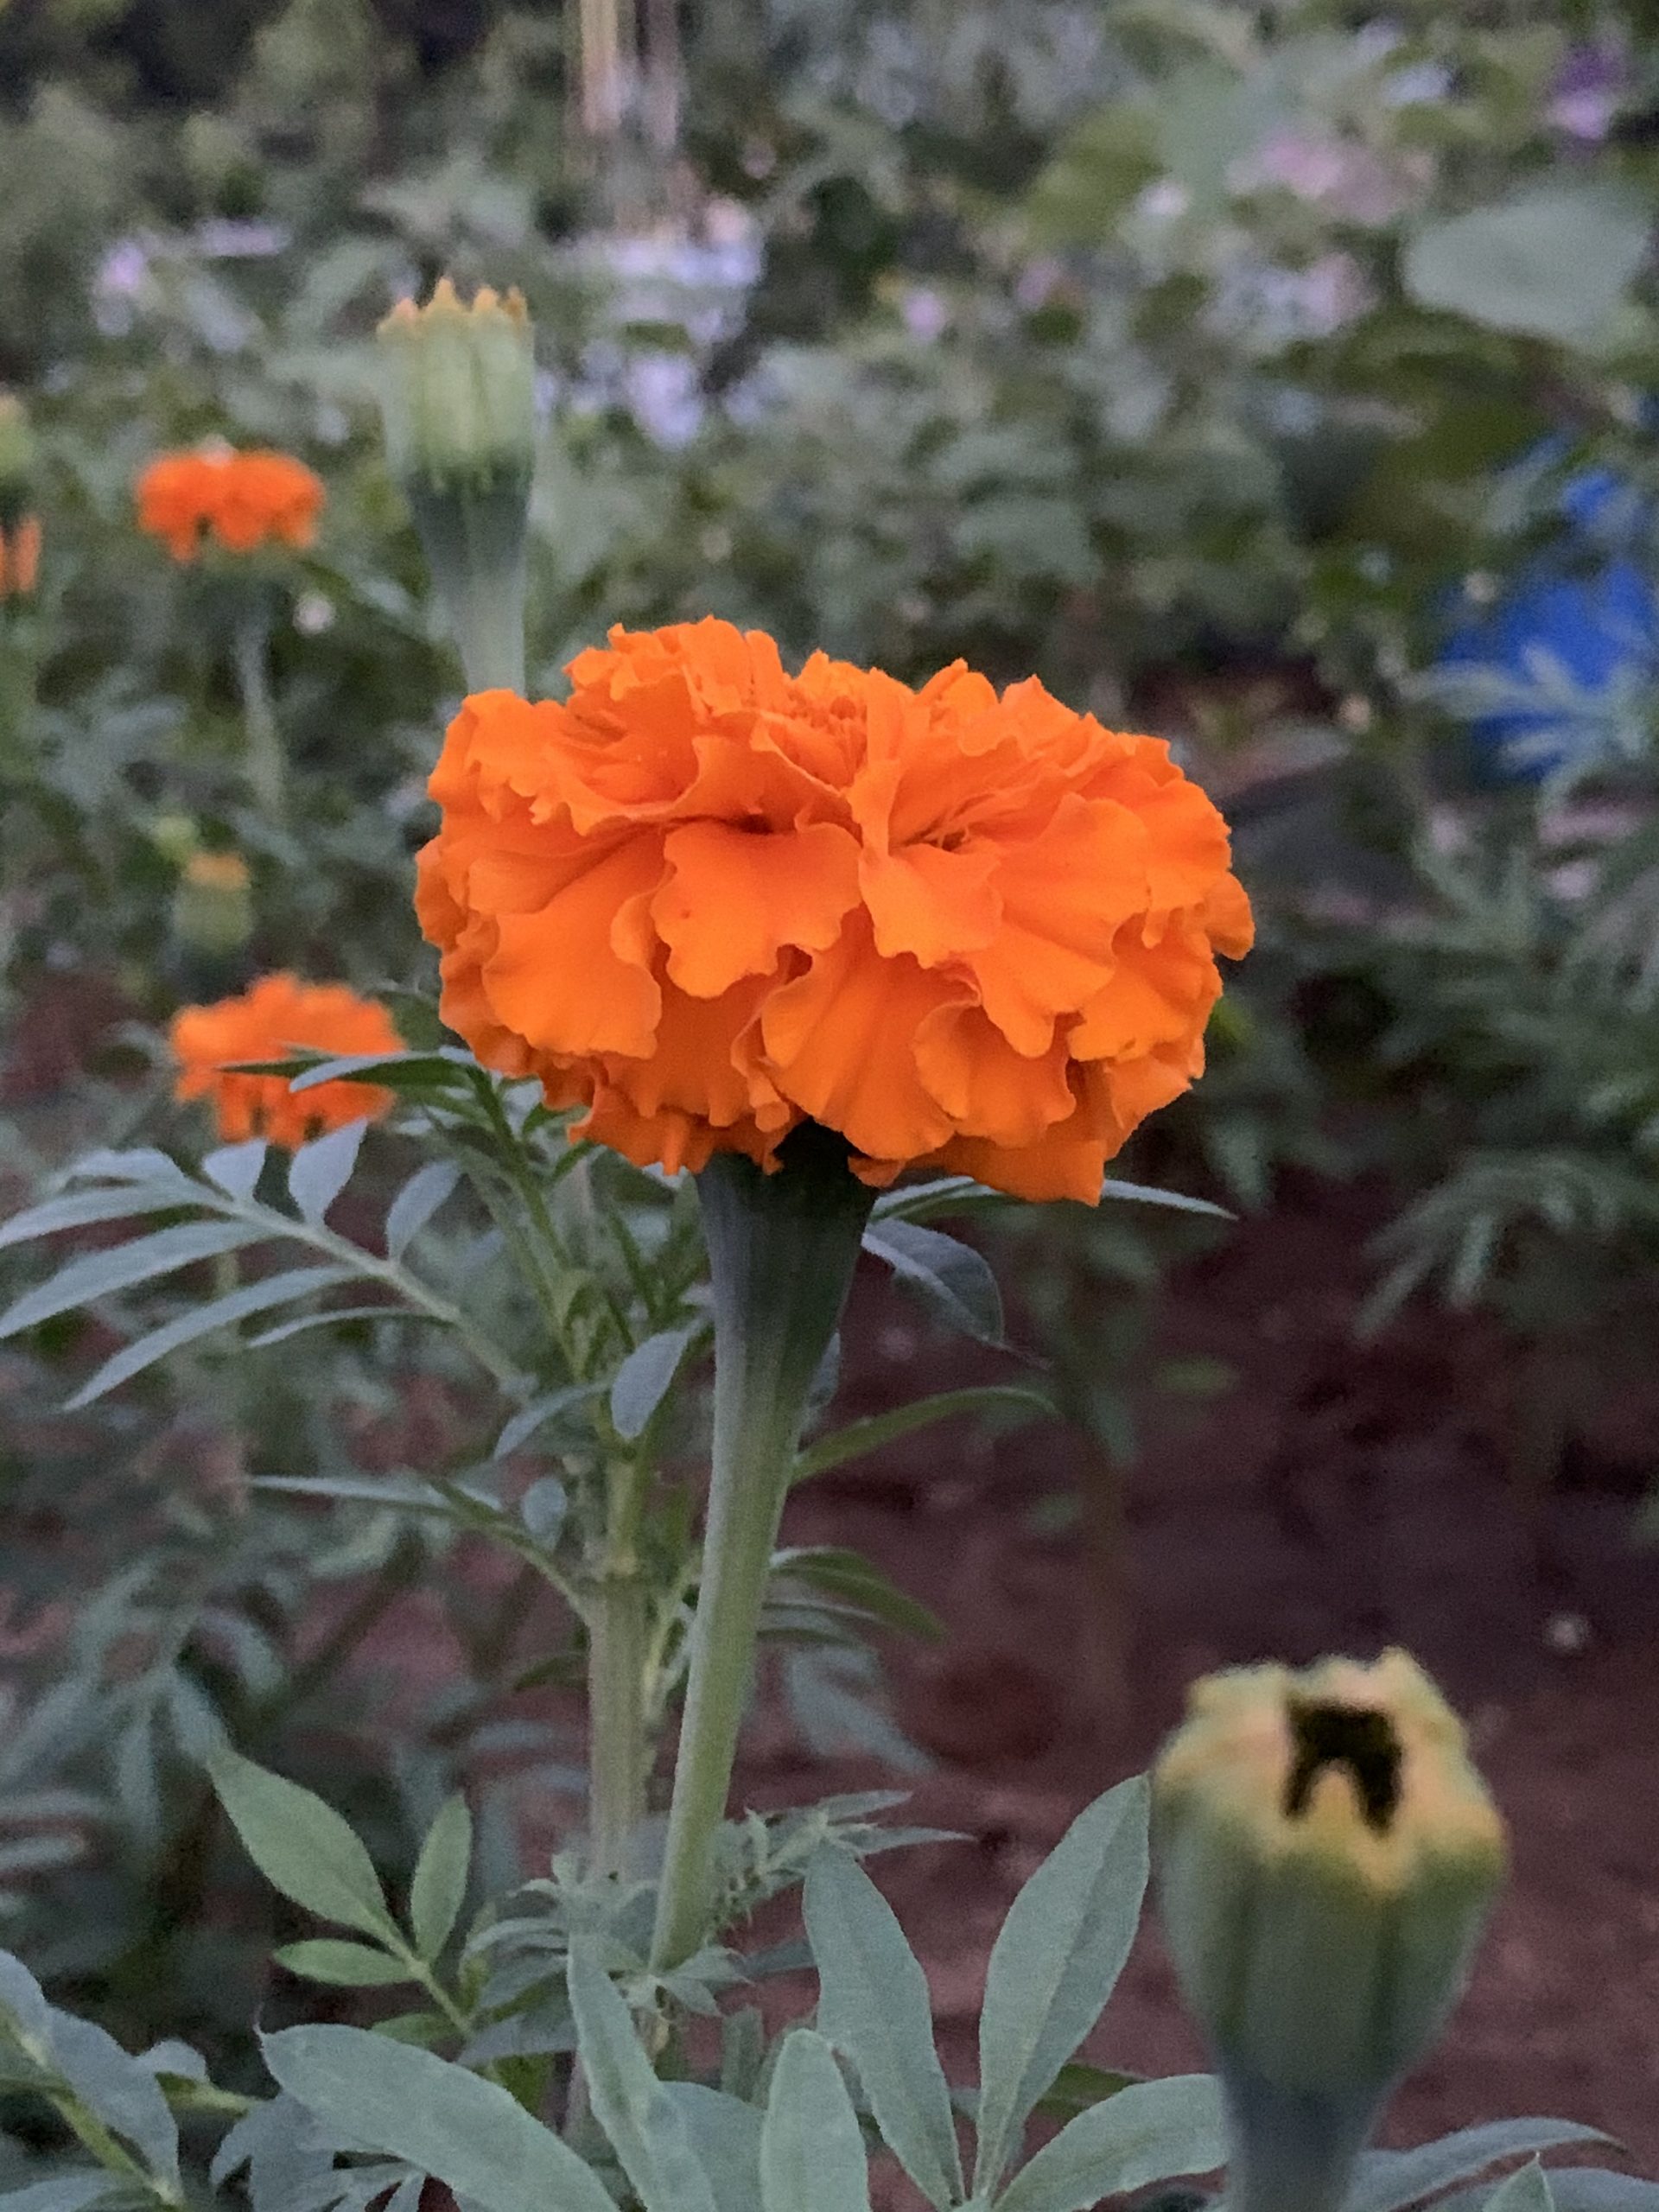 Marigold flowers in a garden